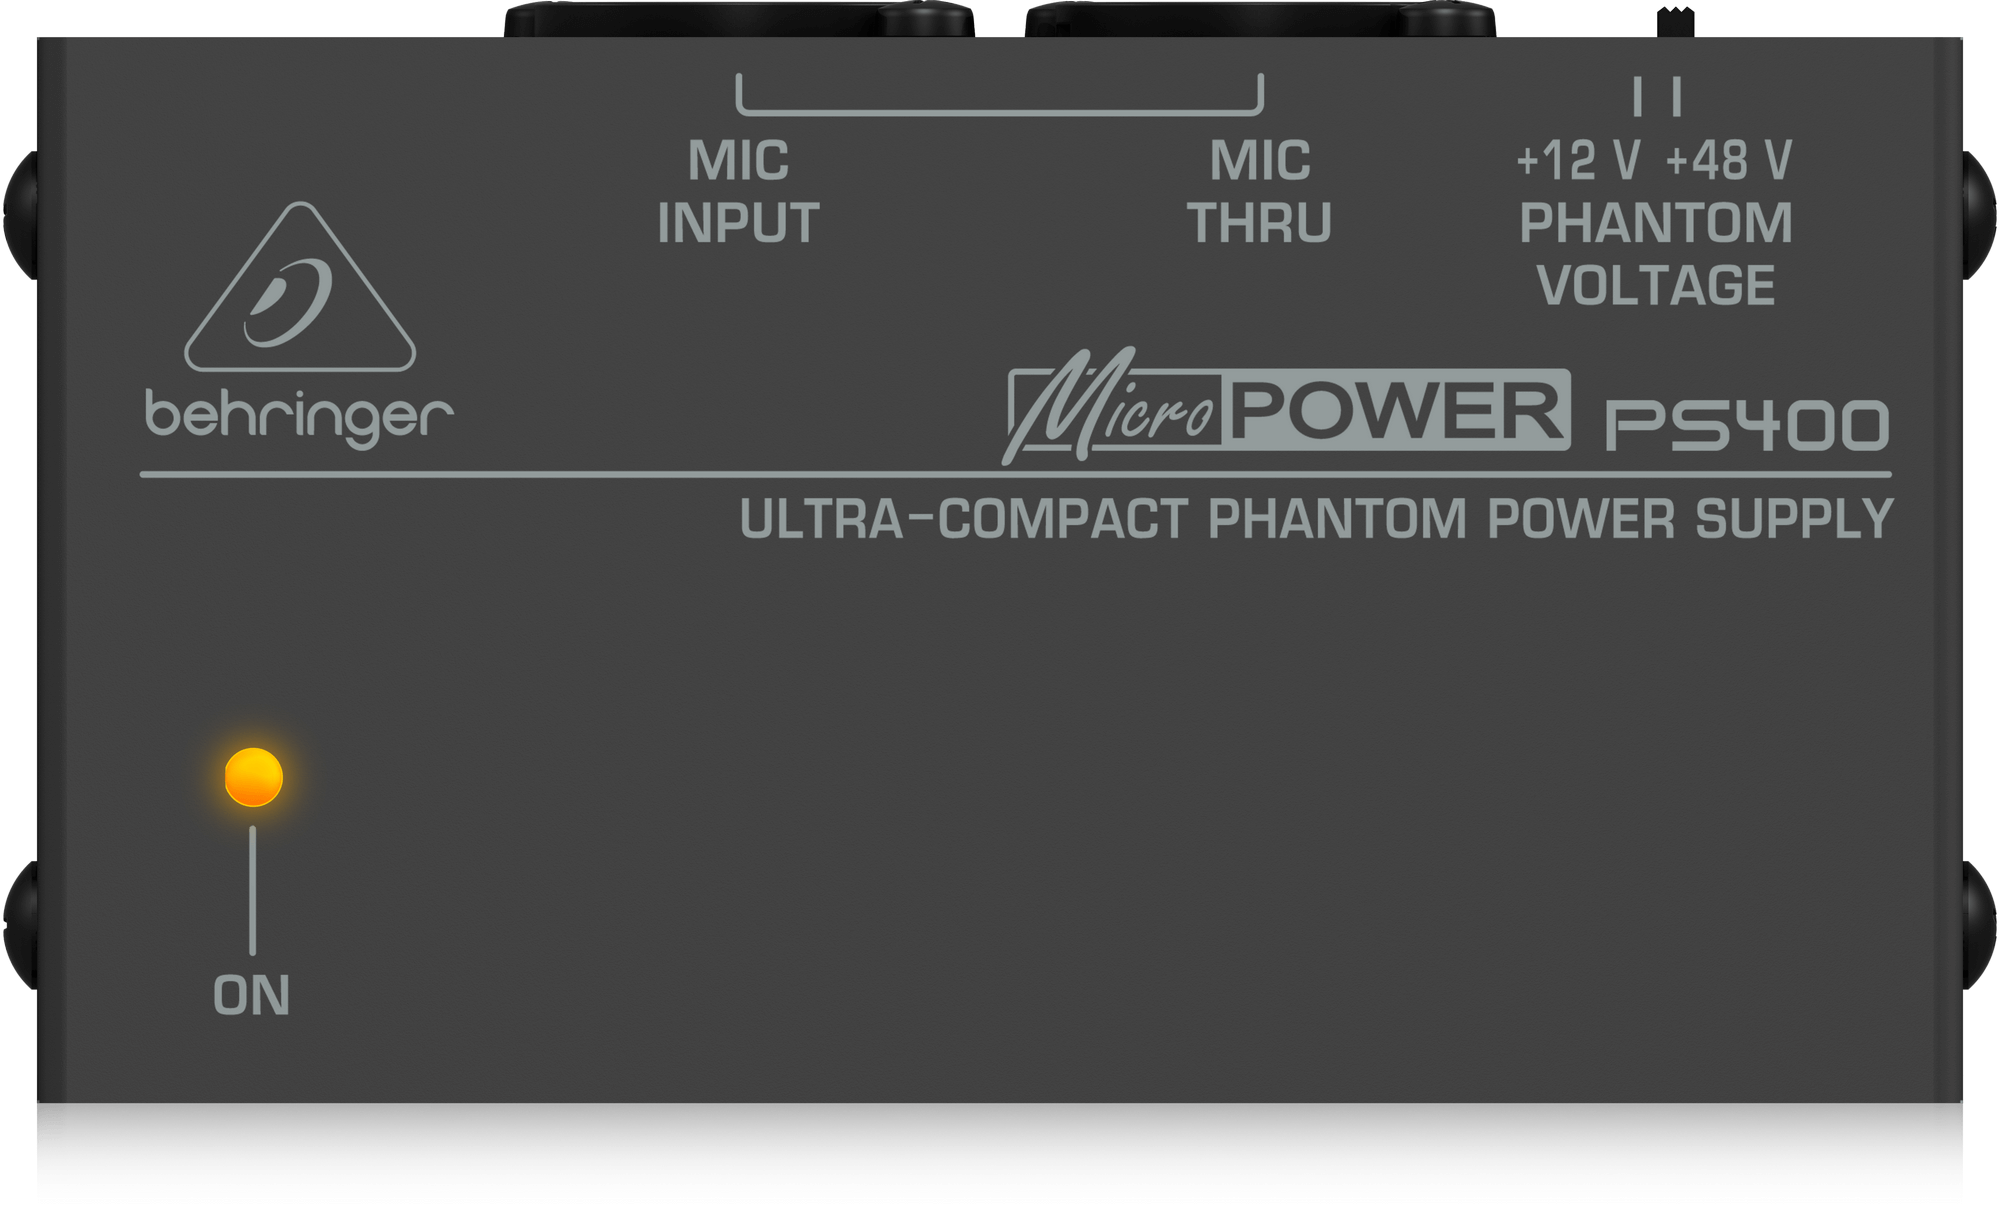 MicroPower PS400 Phantom Power Supply